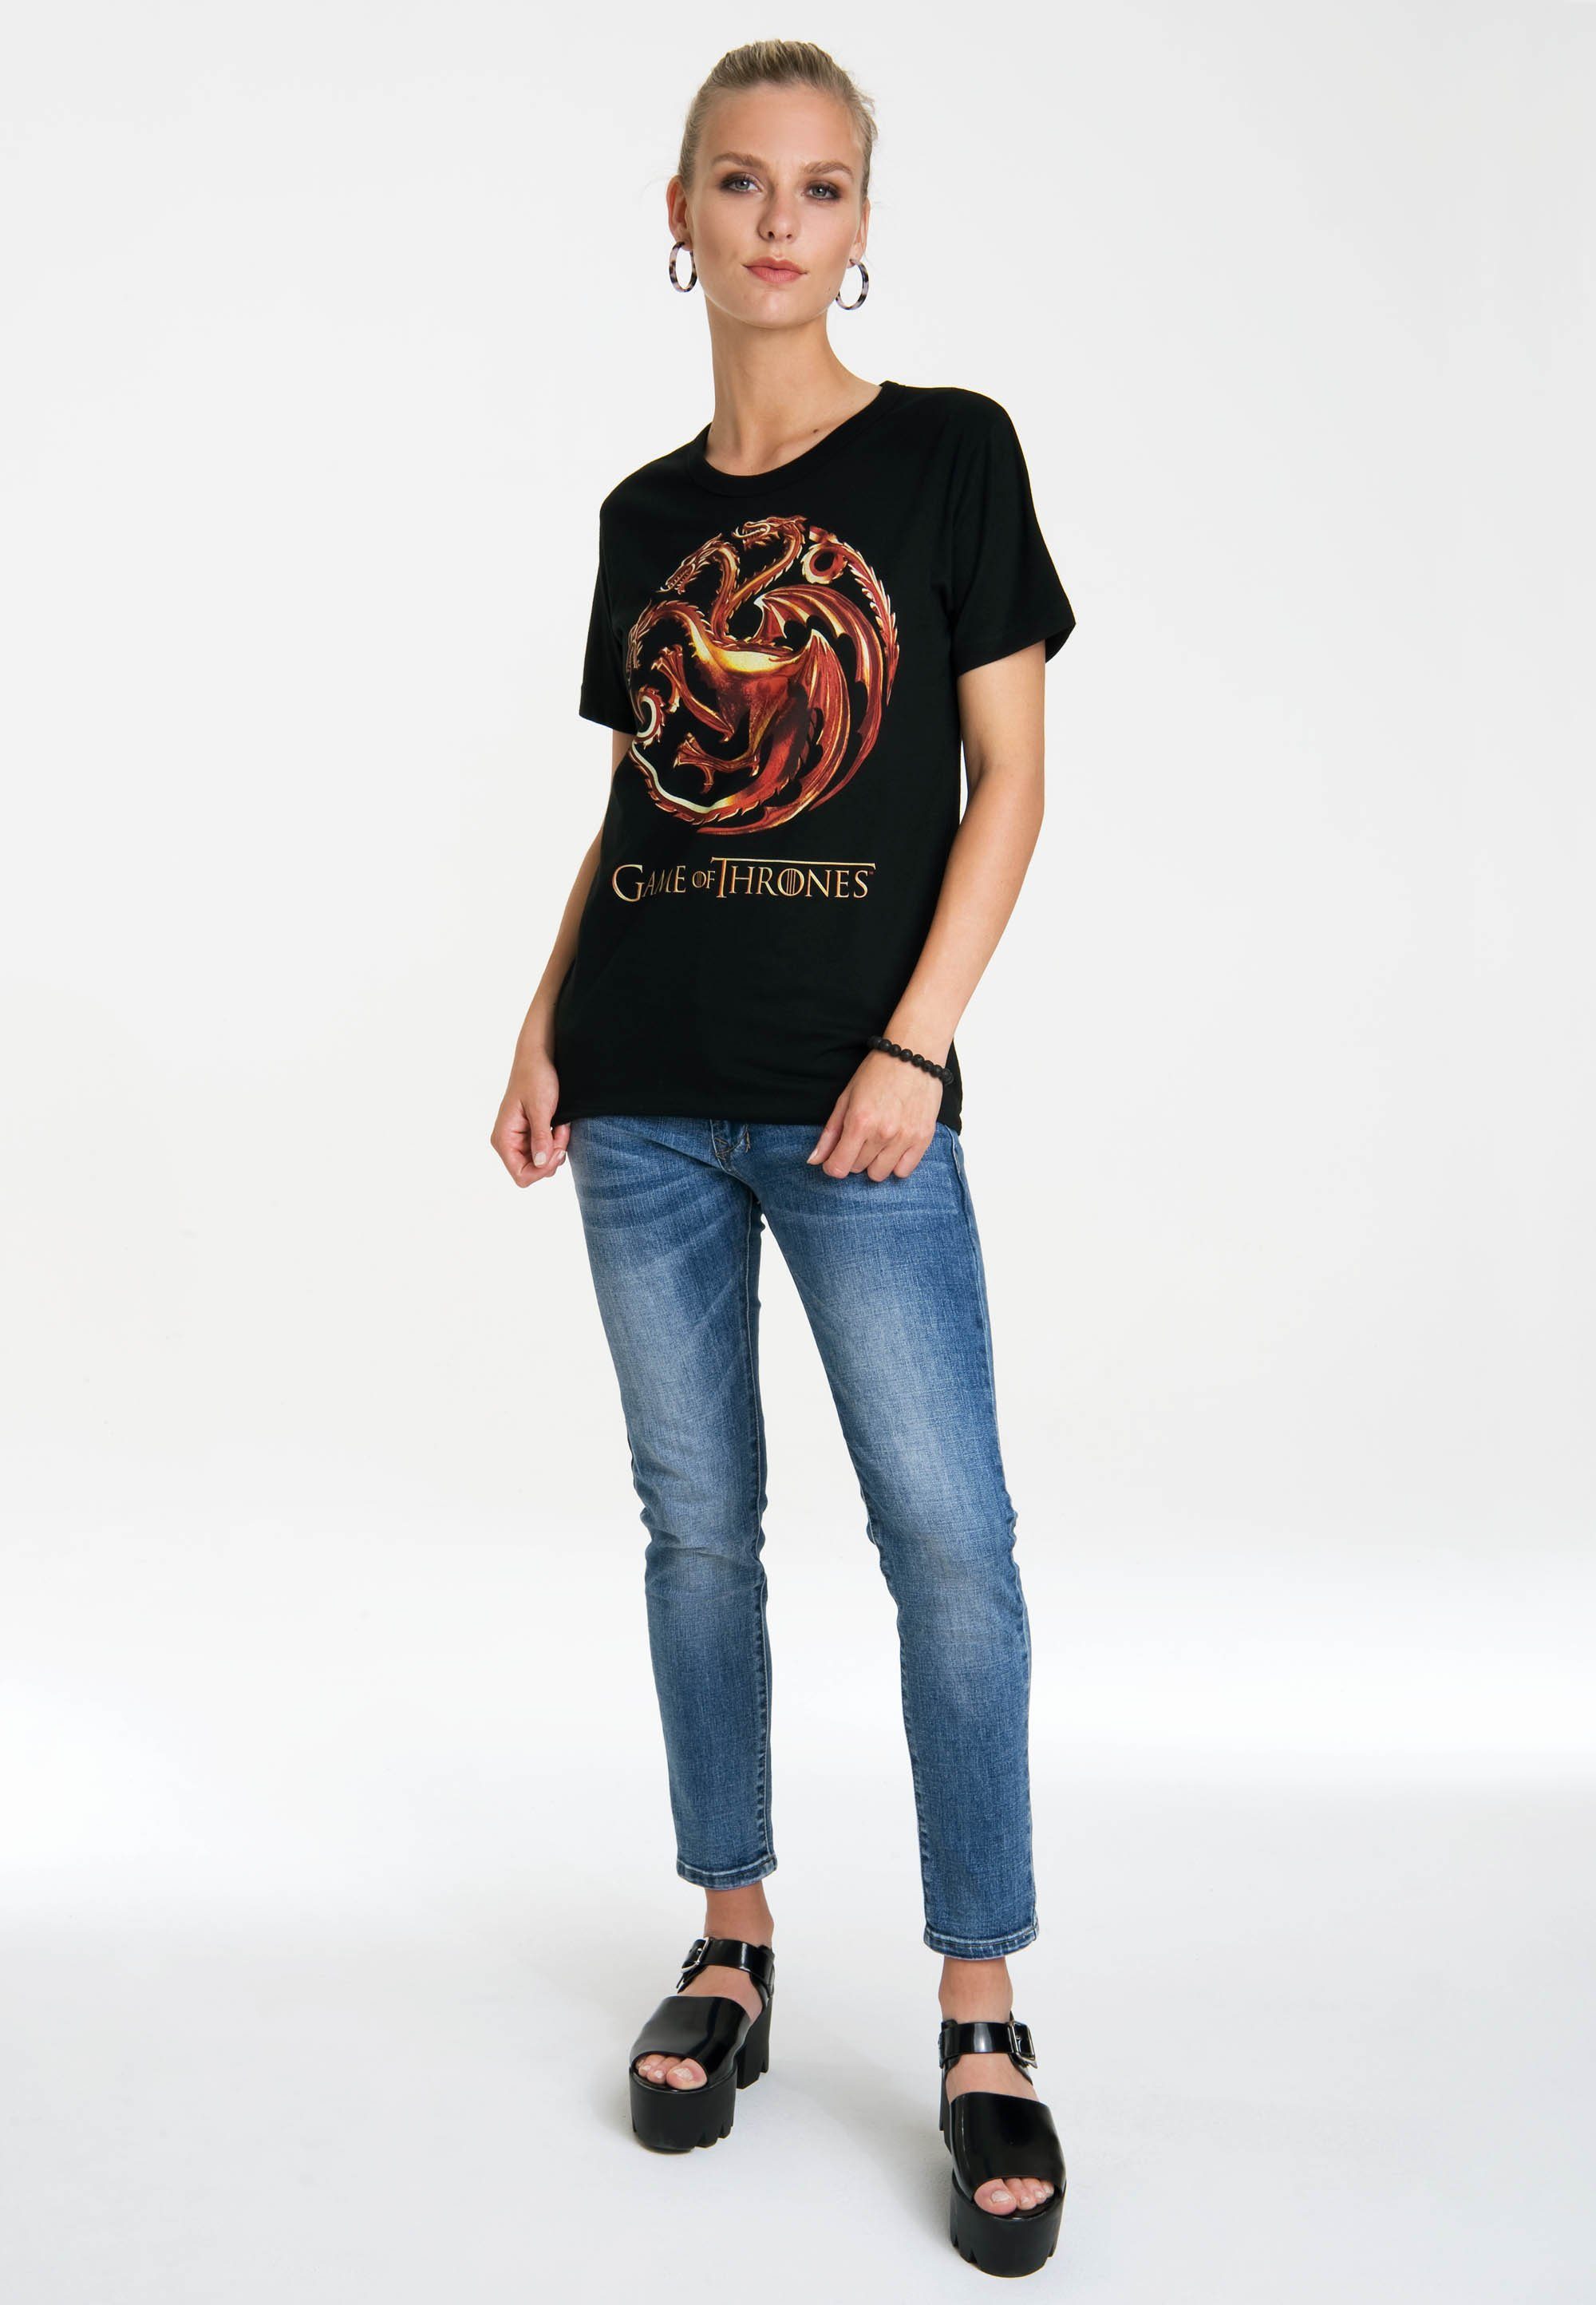 Damen Shirts LOGOSHIRT T-Shirt Game of Thrones mit lizenziertem Originaldesign